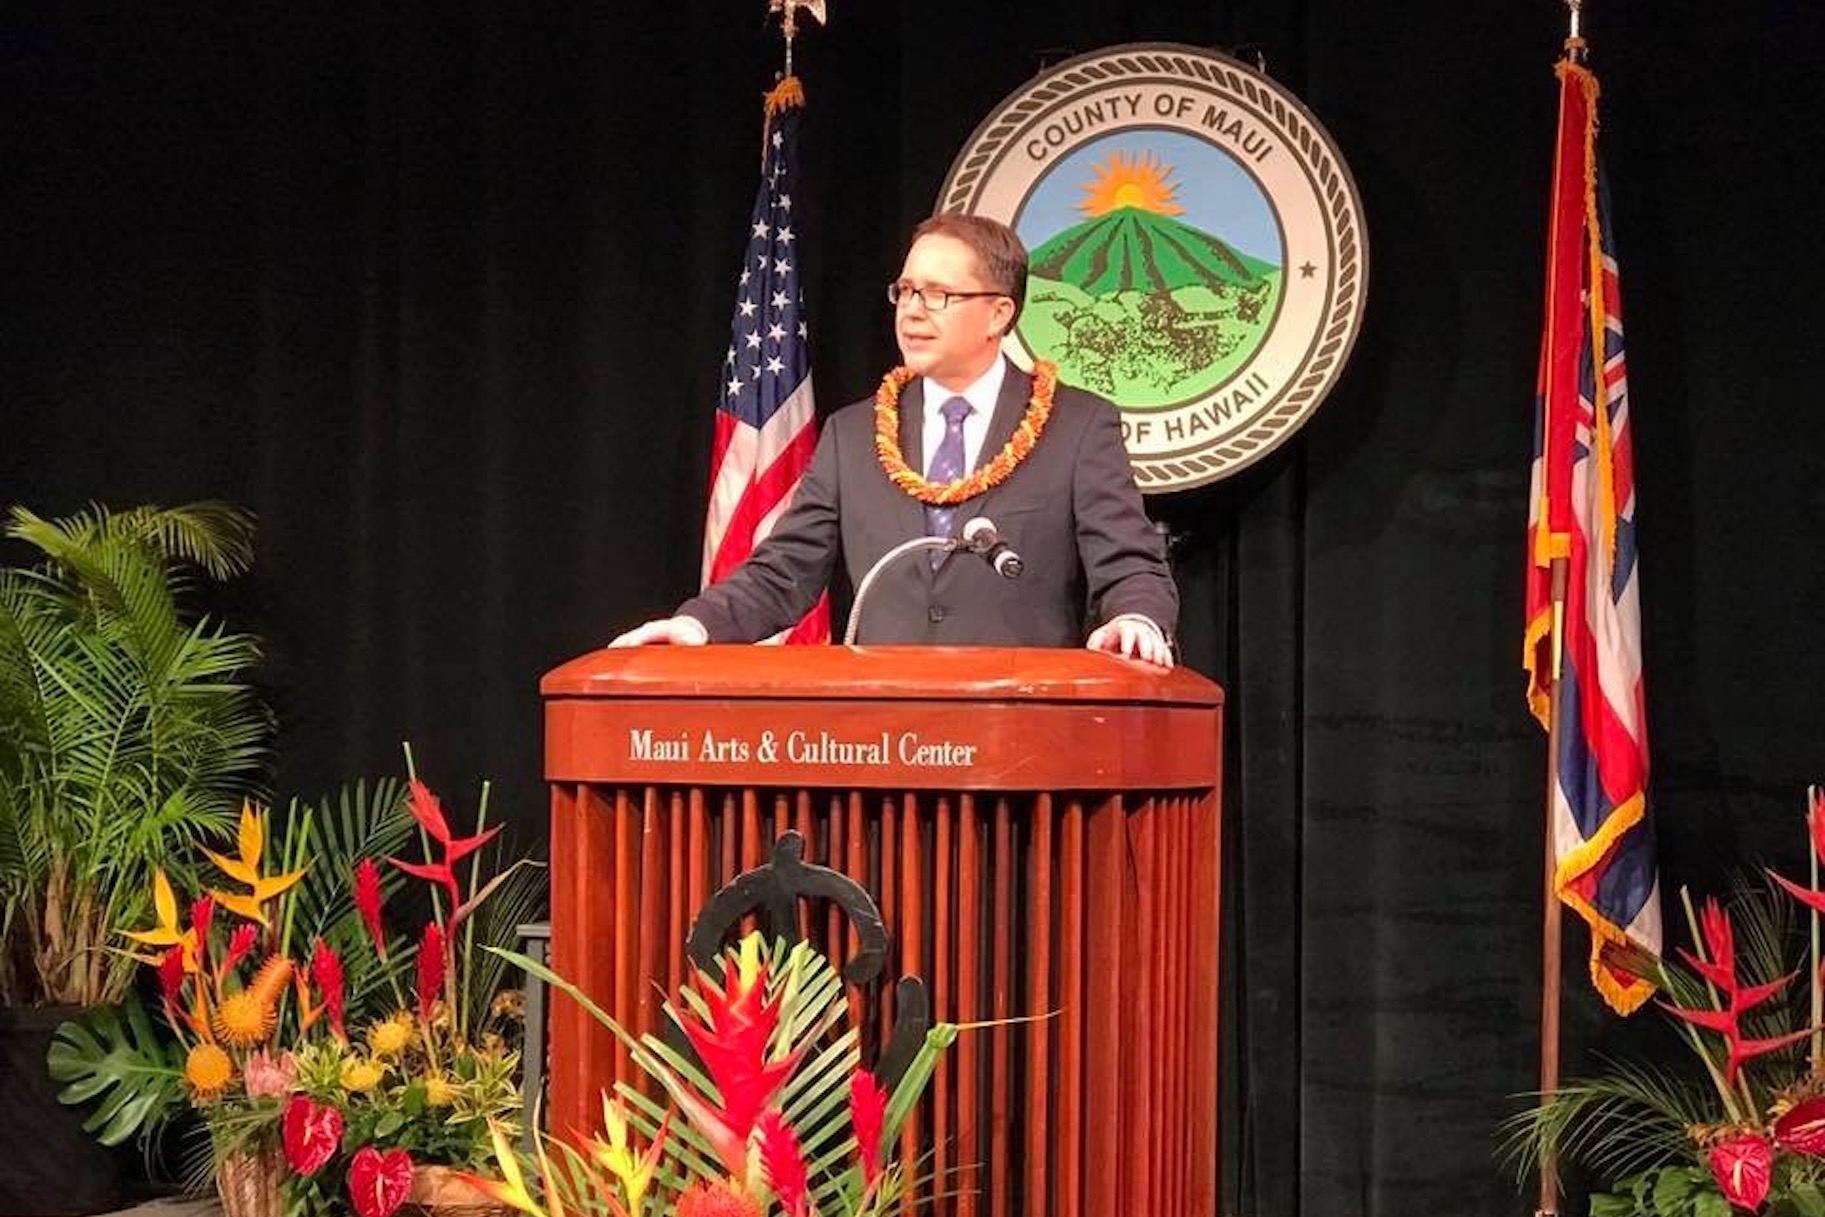 Keith Regan Usc Price Alumnus Online Mpa Hawaii Comptroller